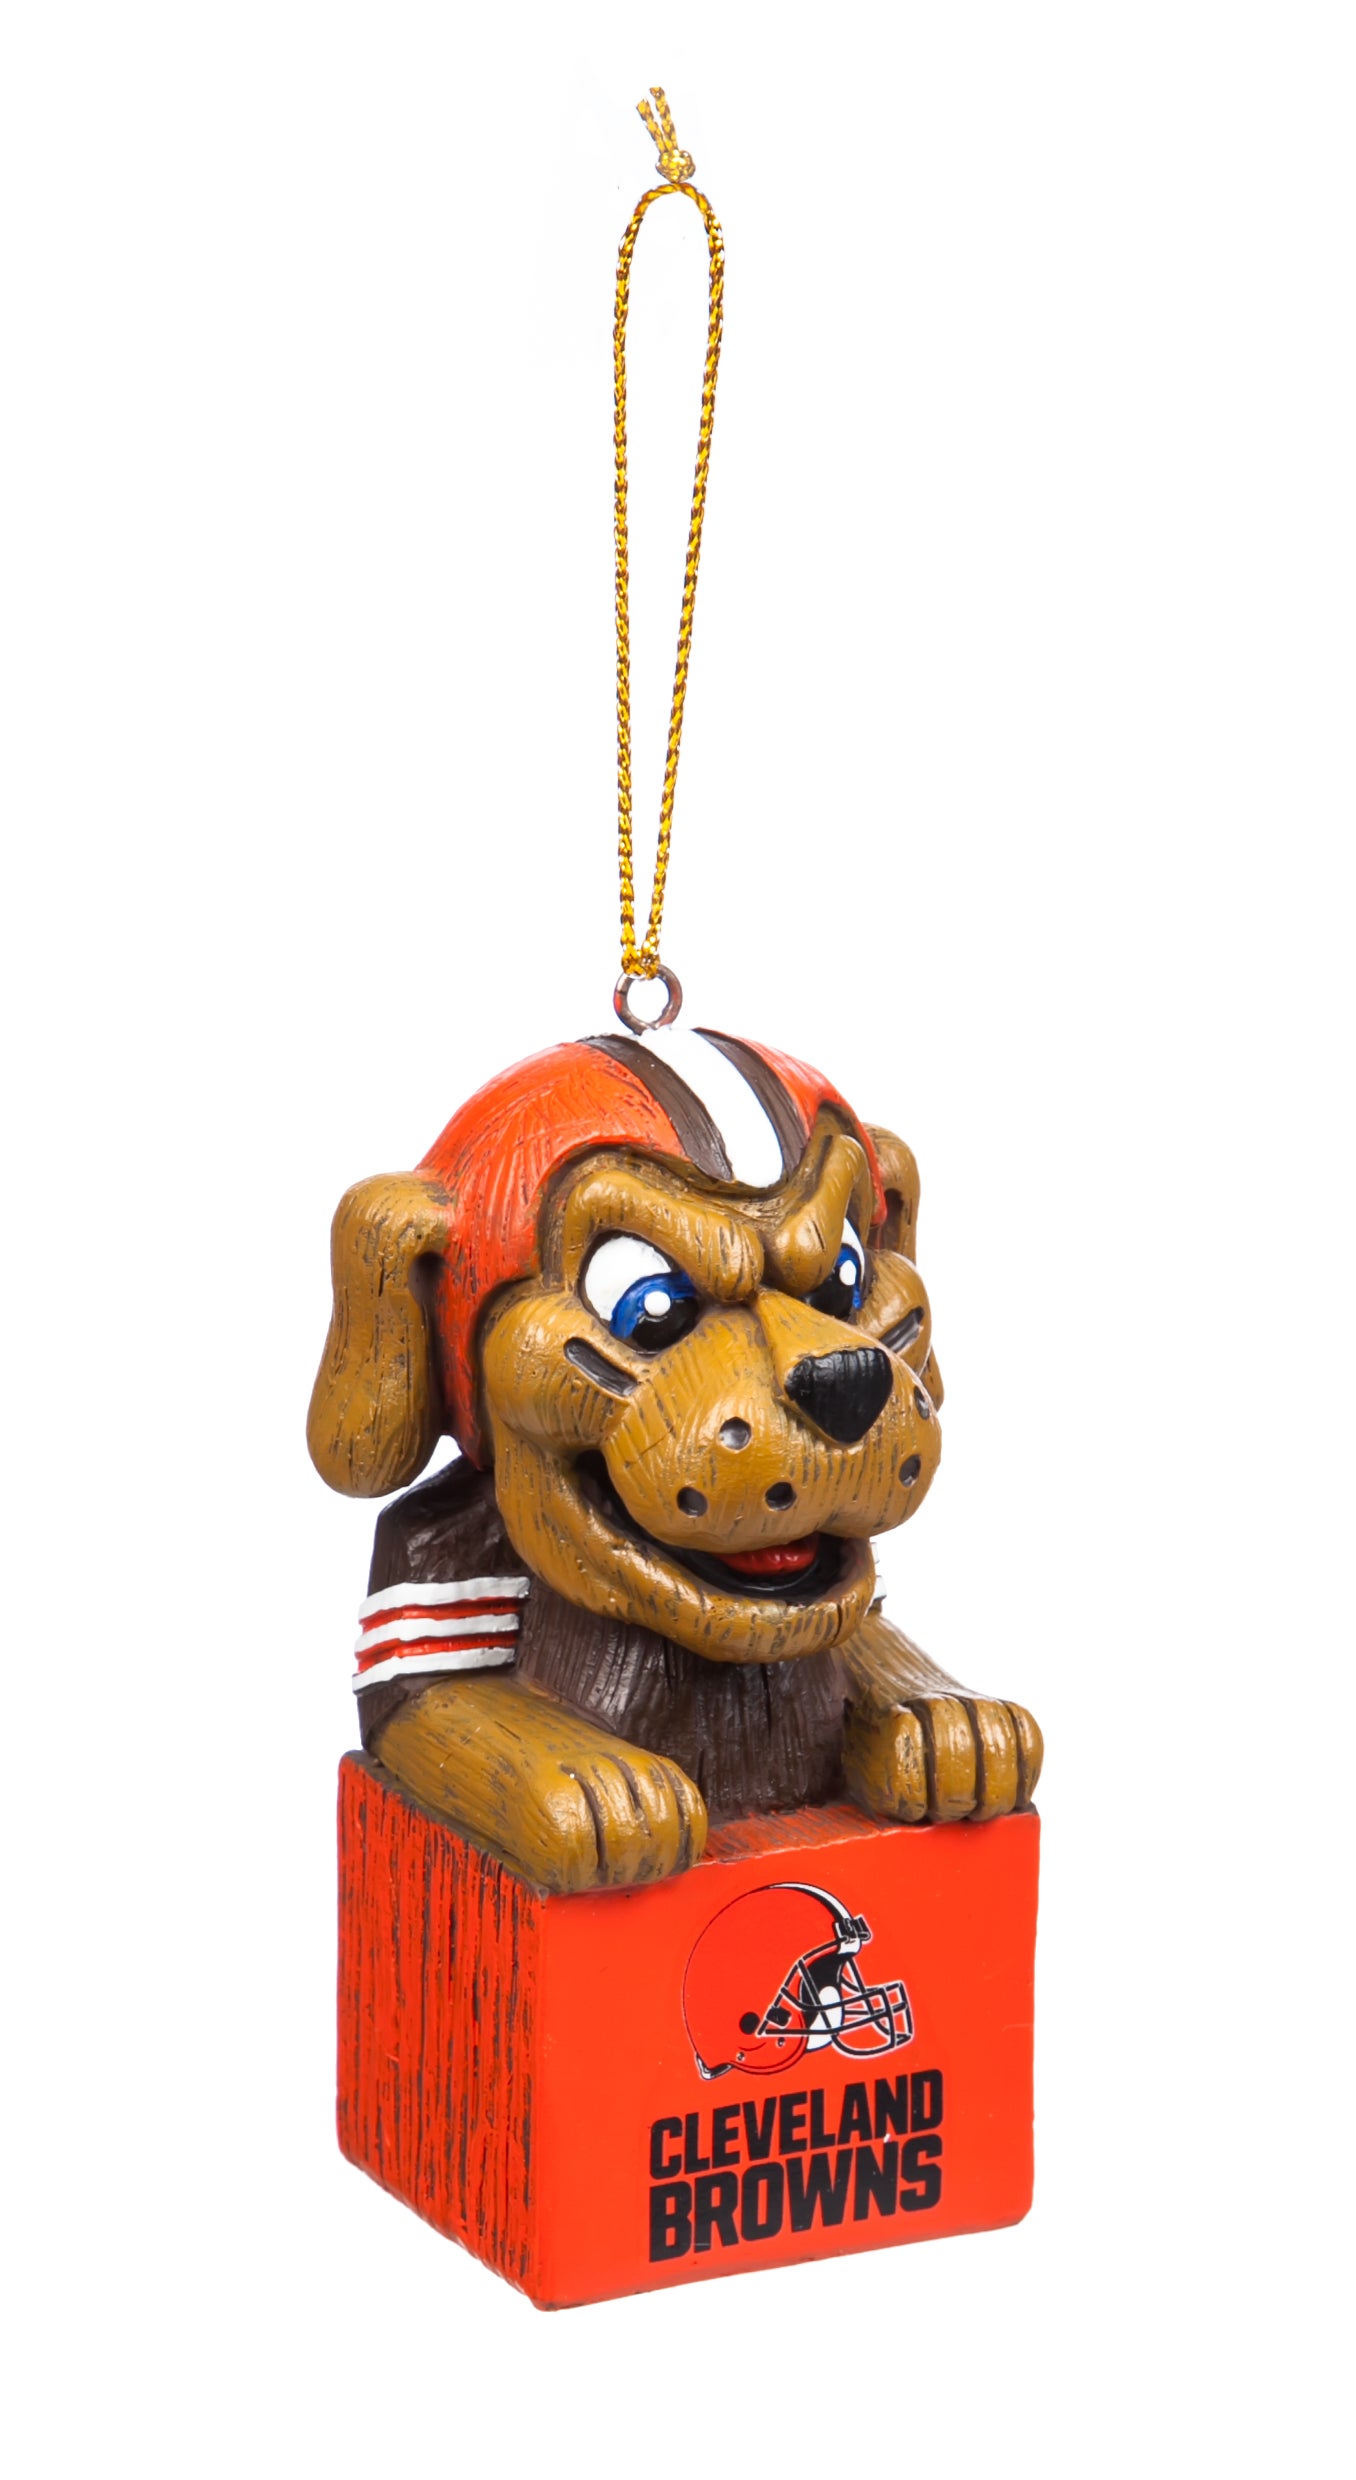 Cleveland Browns Mascot Ornament